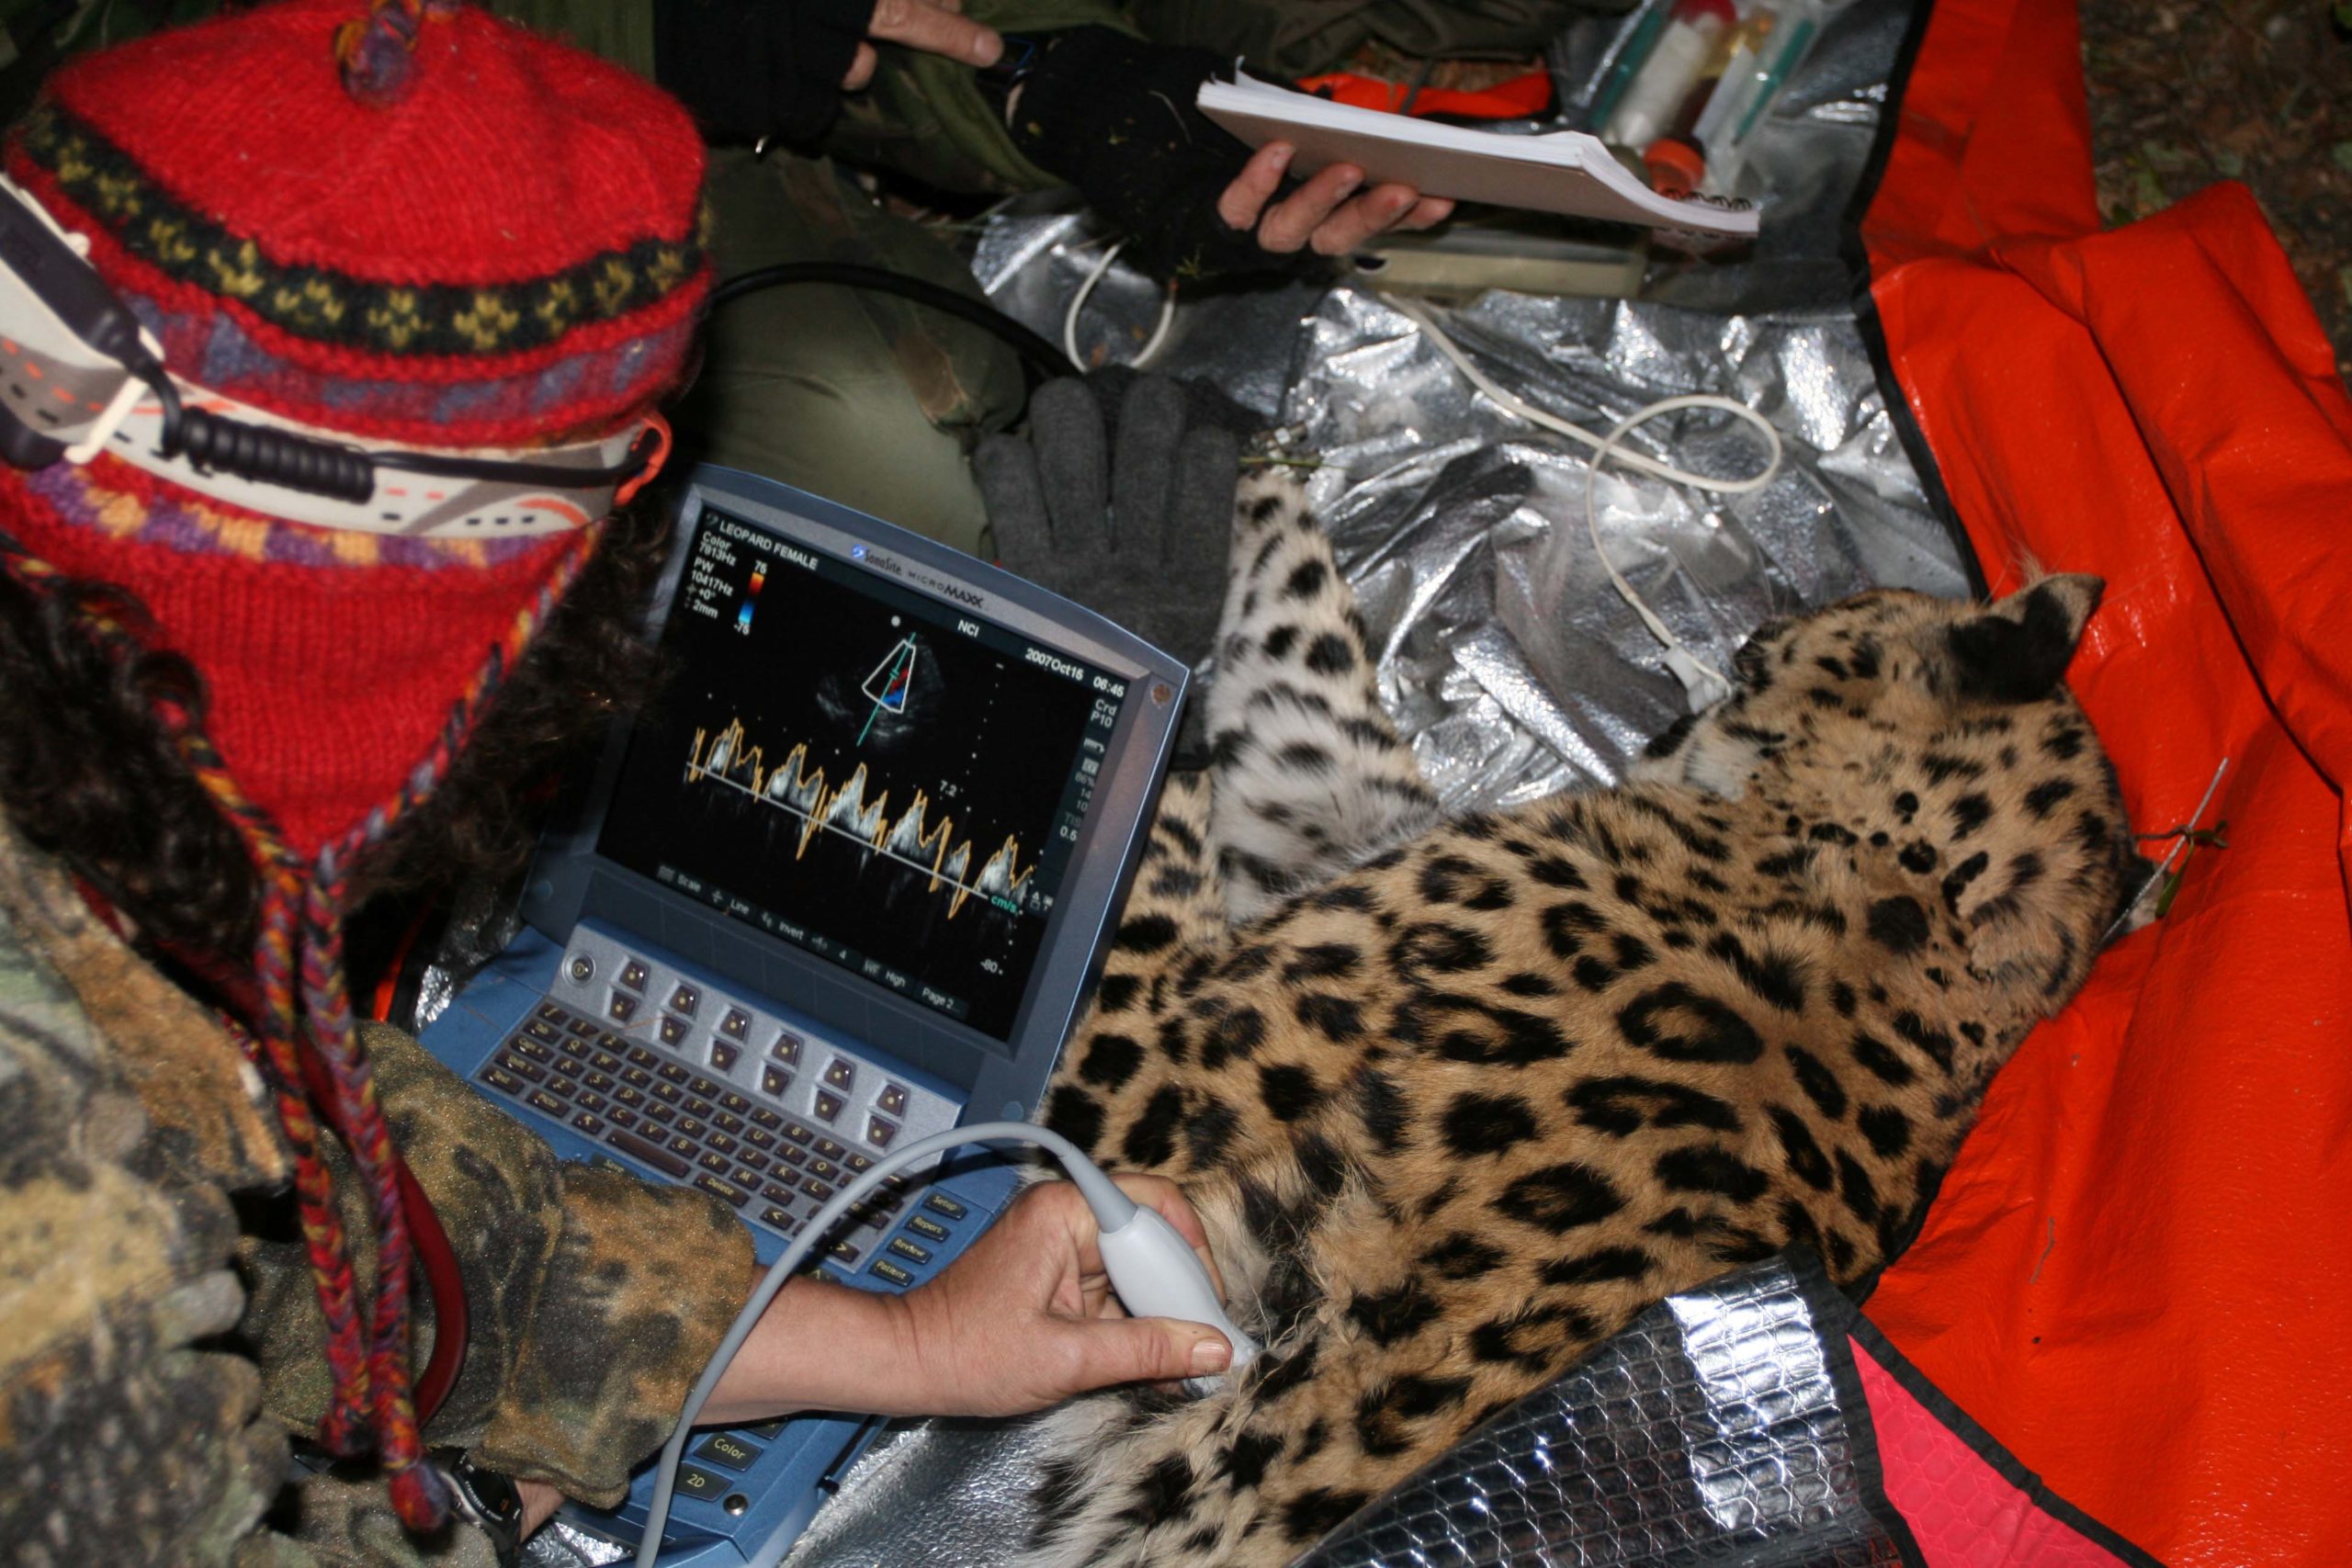 Amur leopard health monitoring